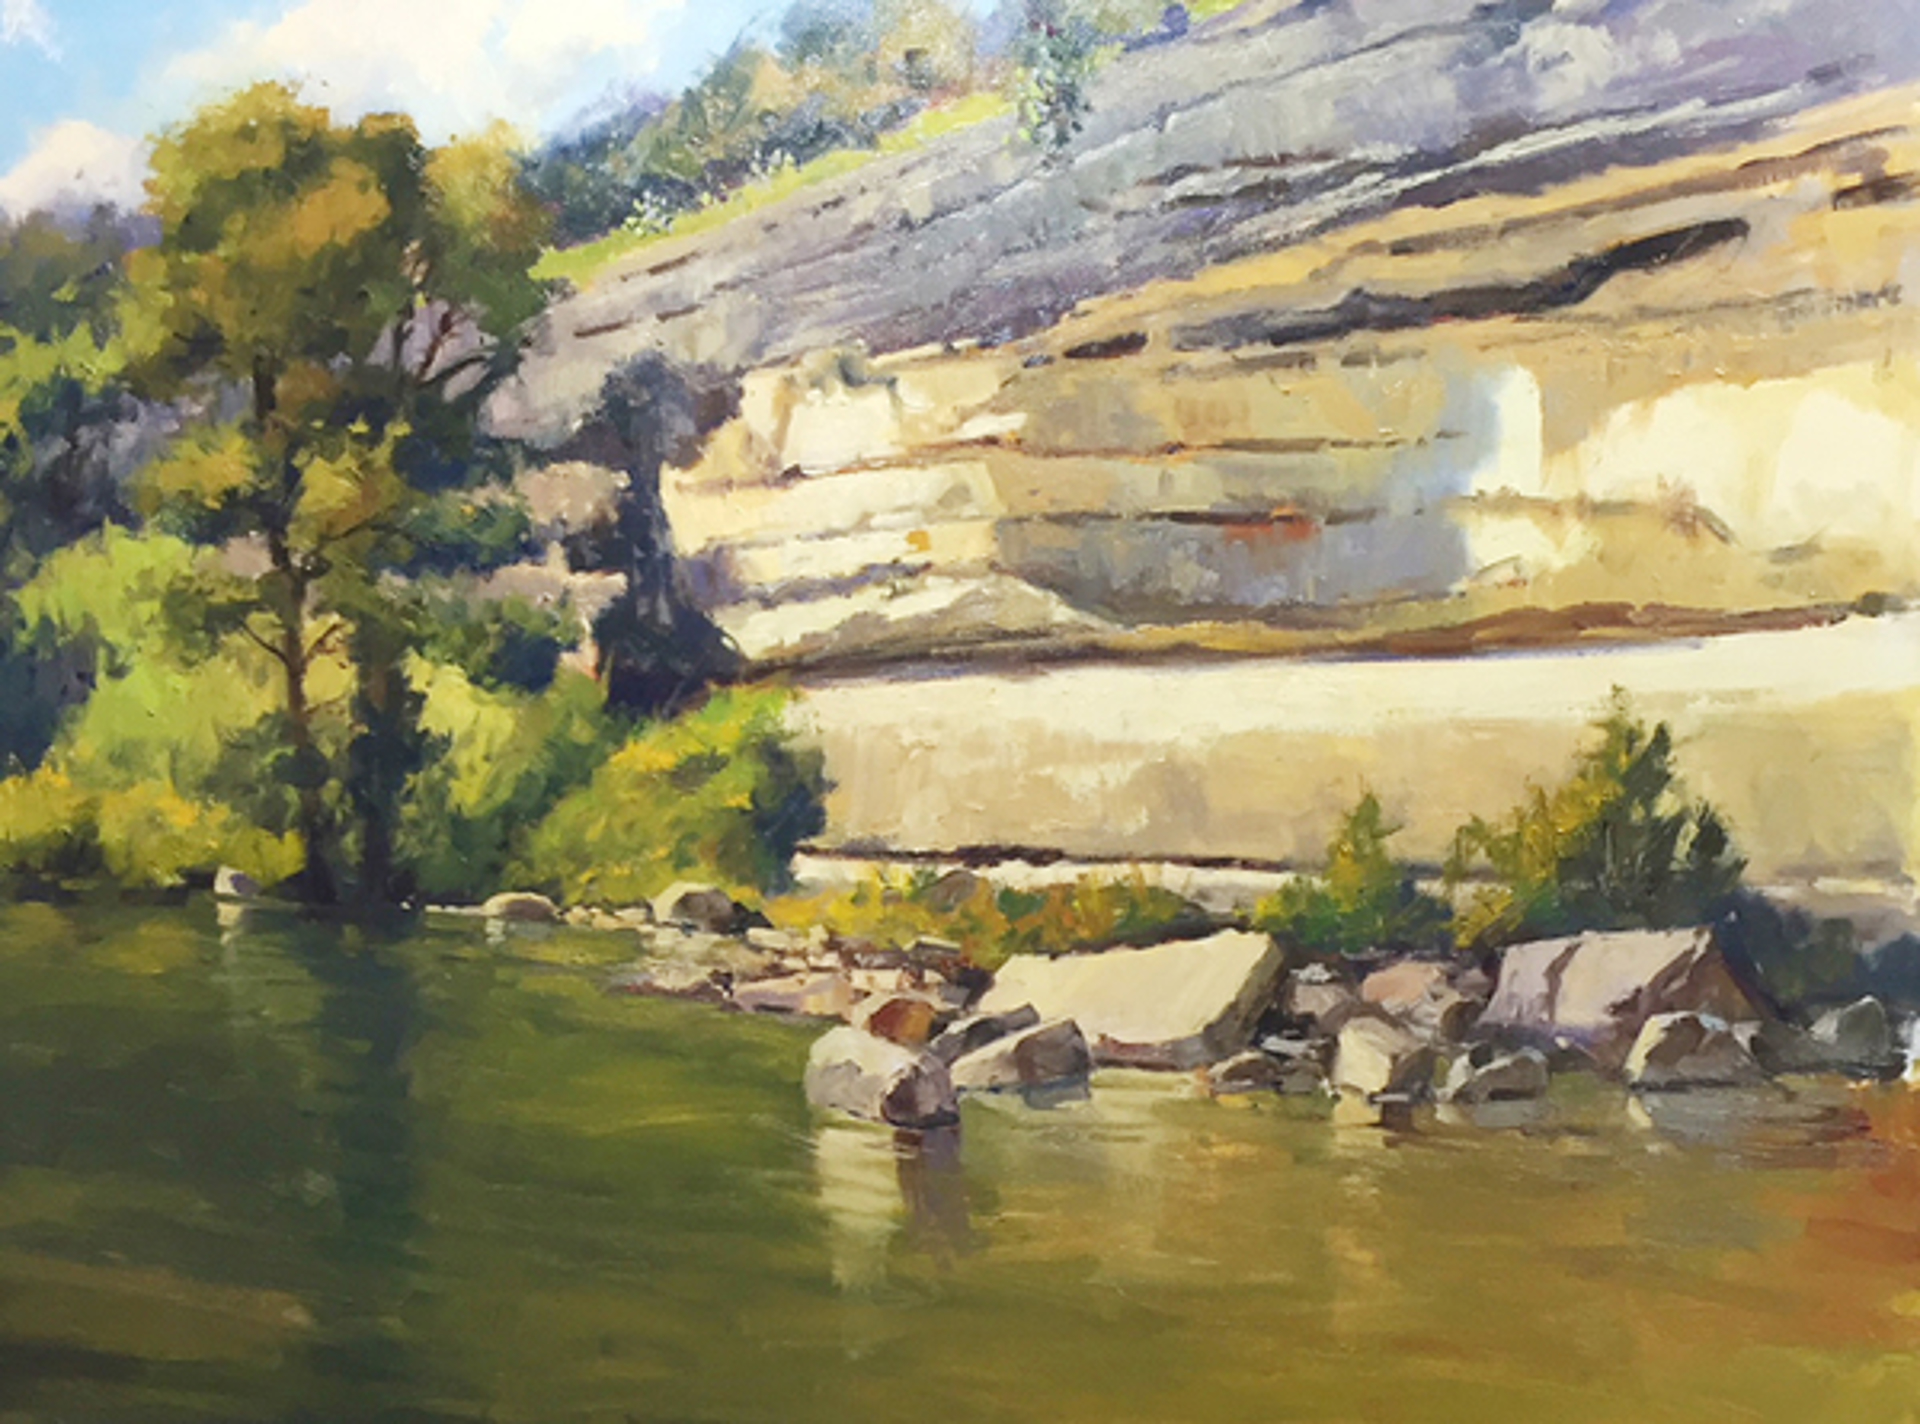 River Dugout by Rusty Jones